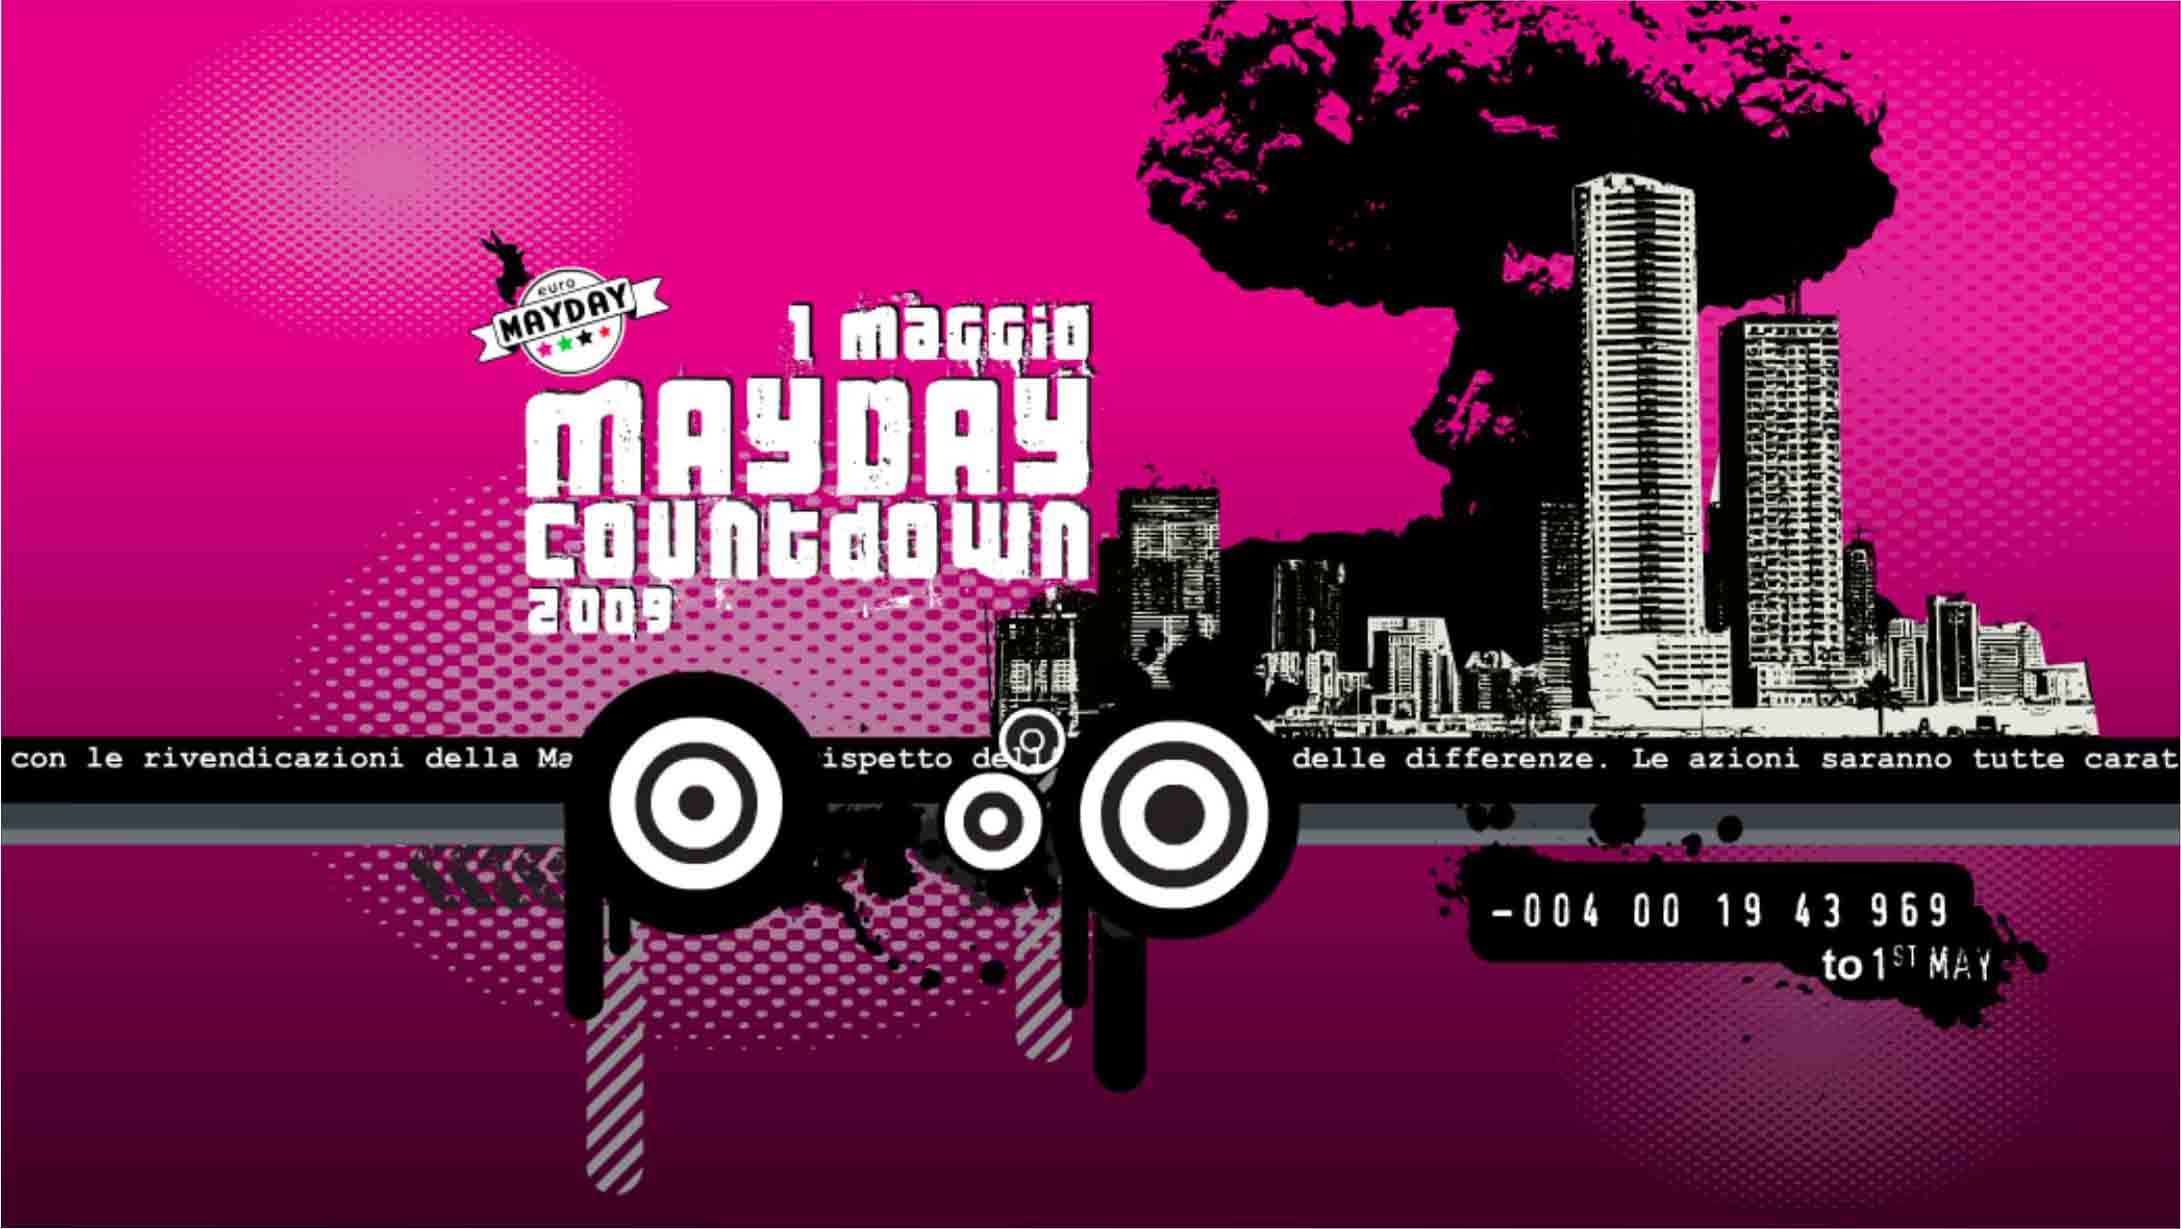 maydaycountdown02_copia.jpg